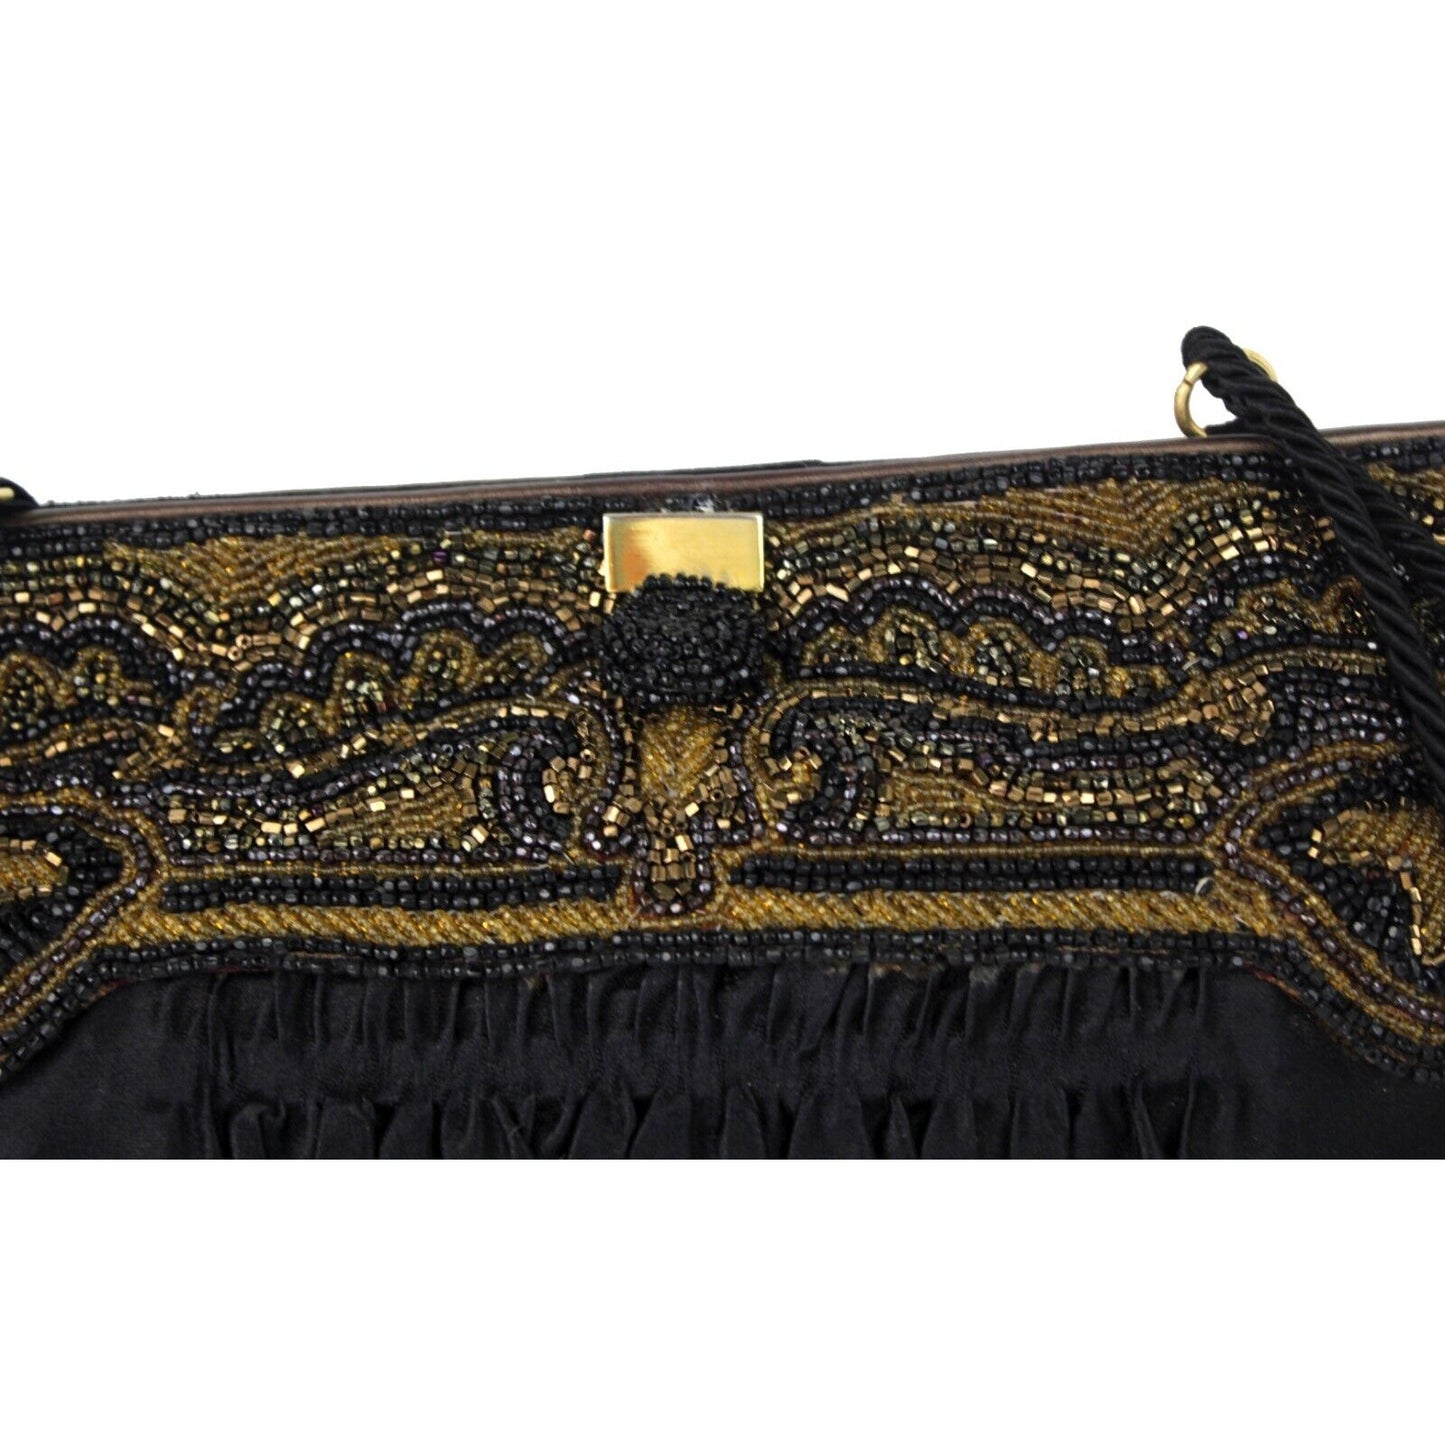 Gucci beaded black silk/satin pouch style cross body